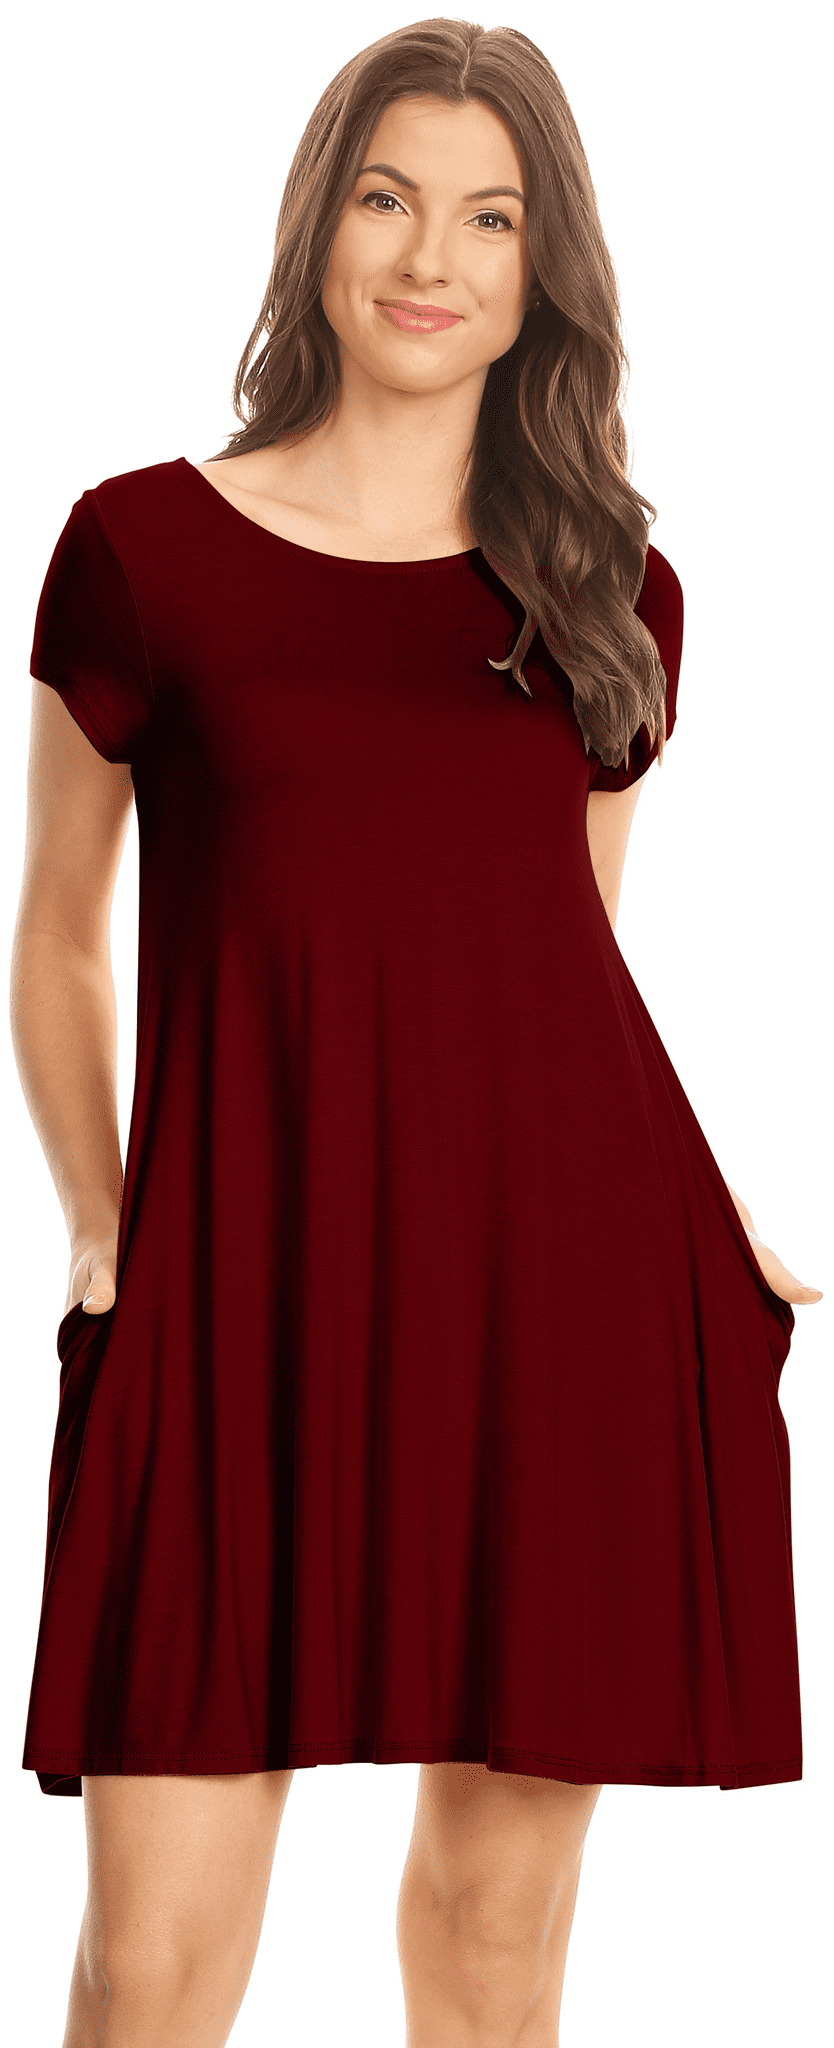 Simlu - Casual T Shirt Dress For Women Flowy Tunic Dress with Pockets ...